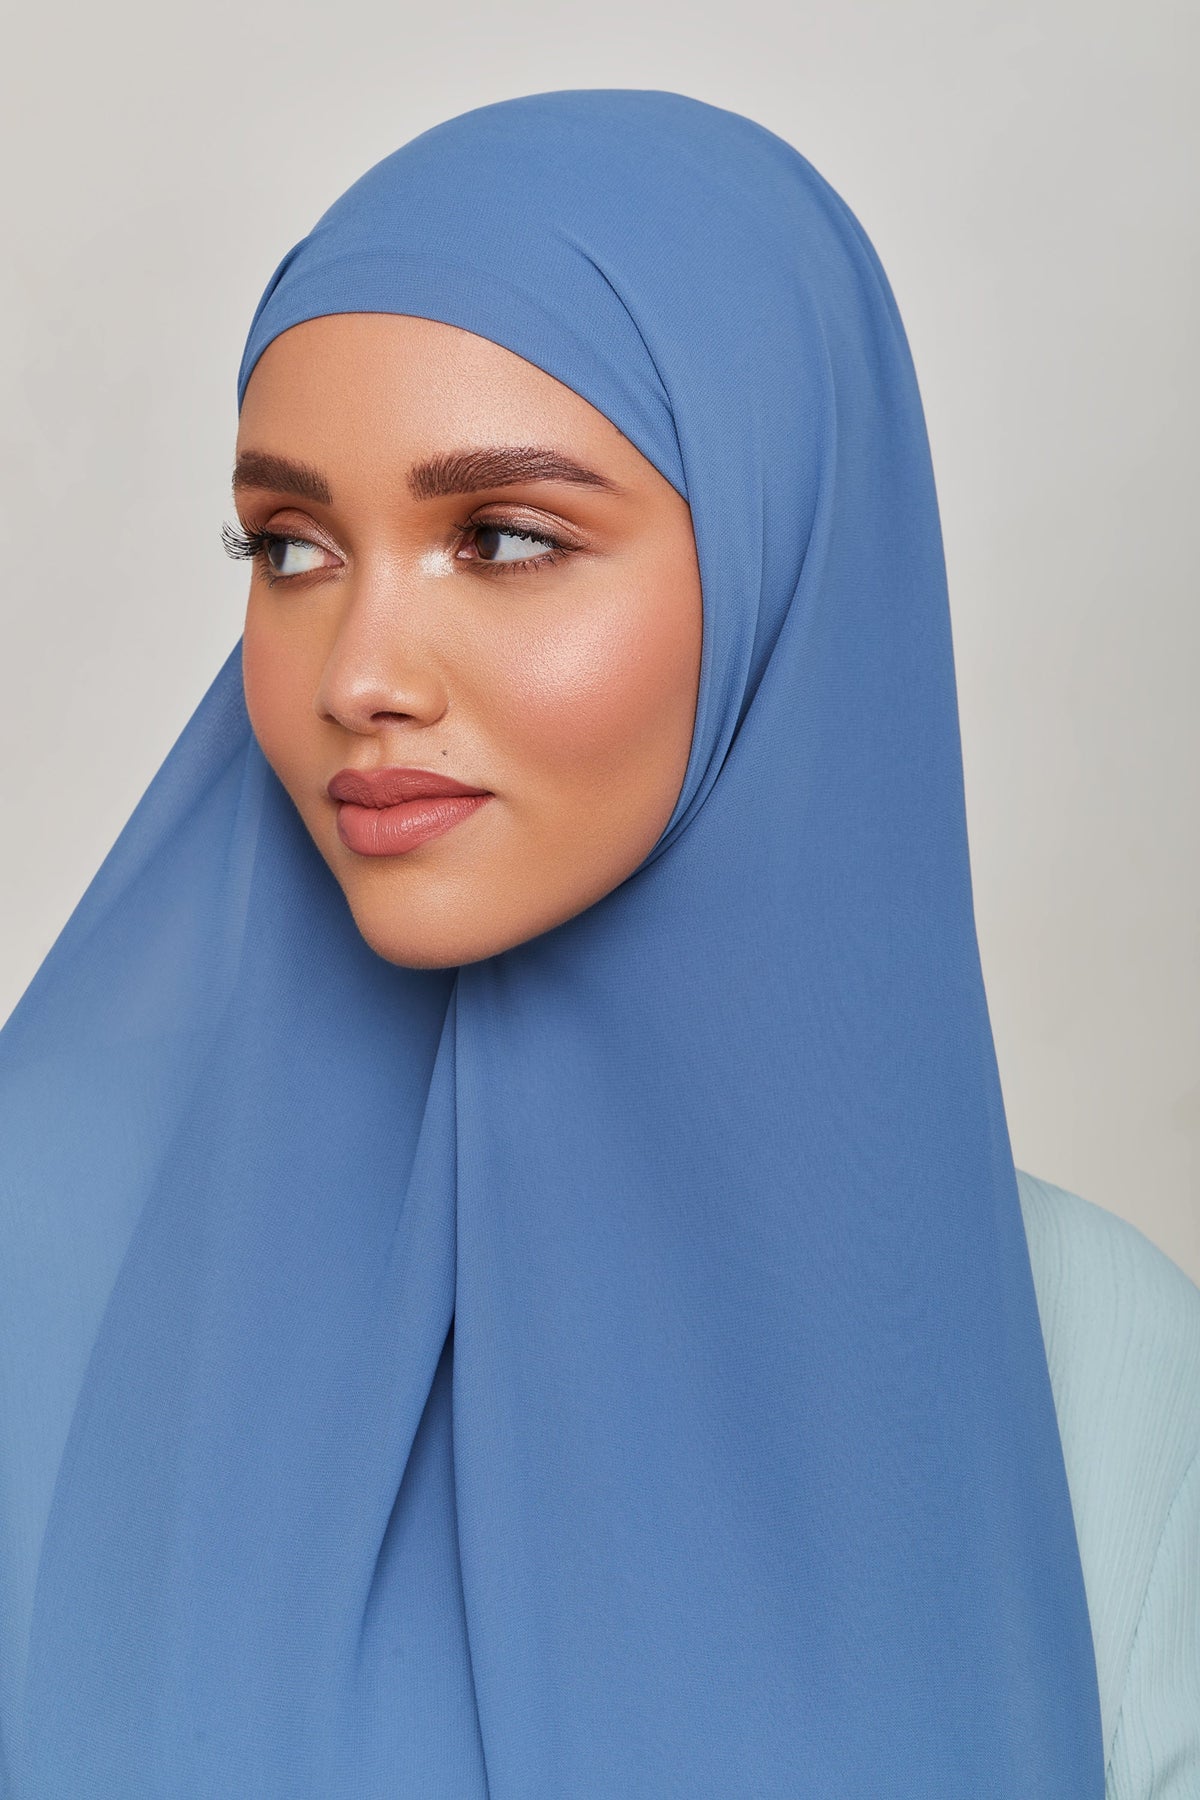 Chiffon LITE Hijab - Coronet Blue epschoolboard 